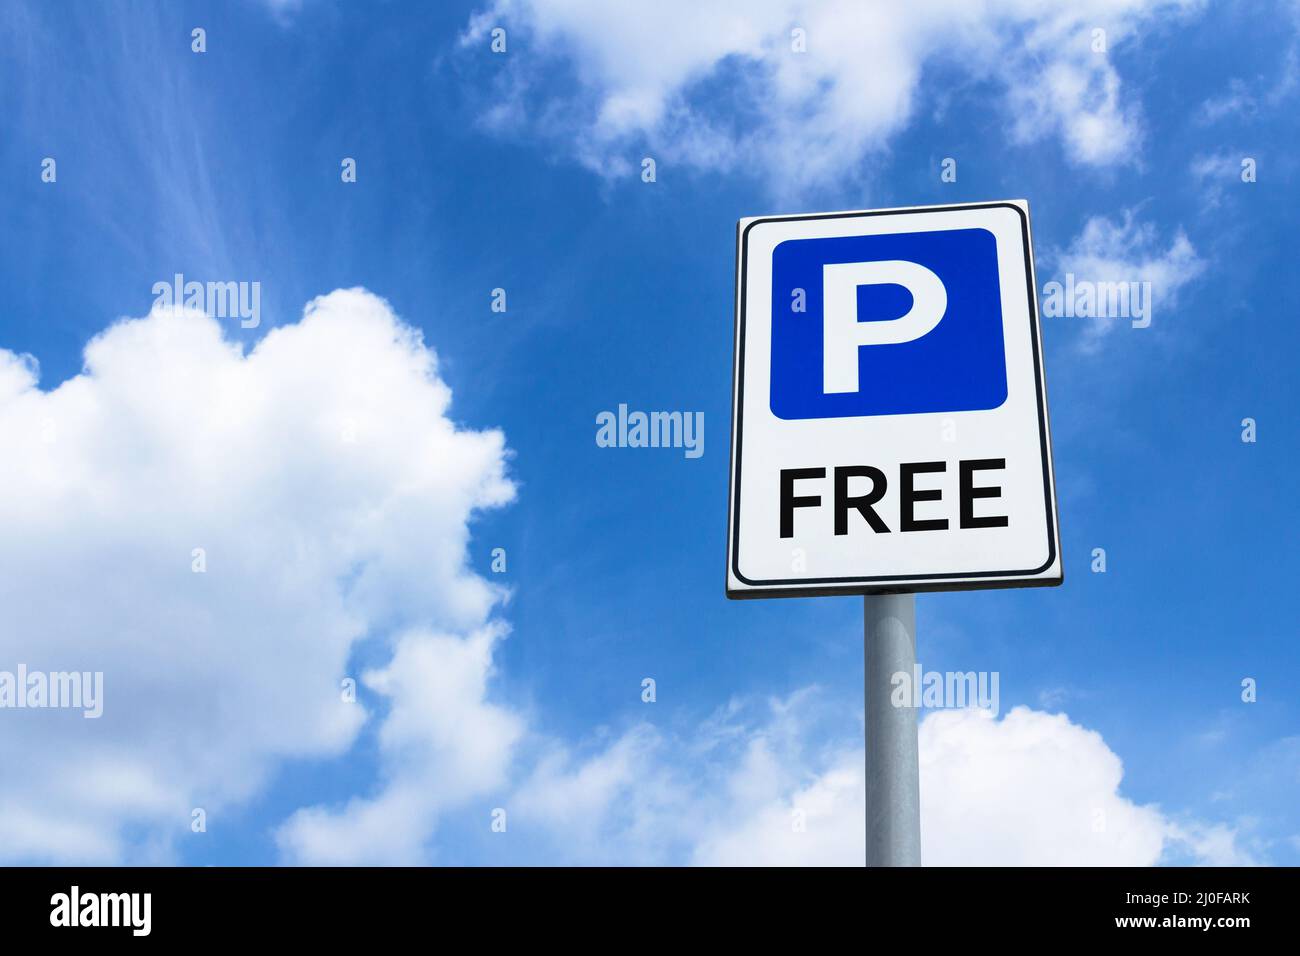 free-parking-sign-stock-photo-alamy